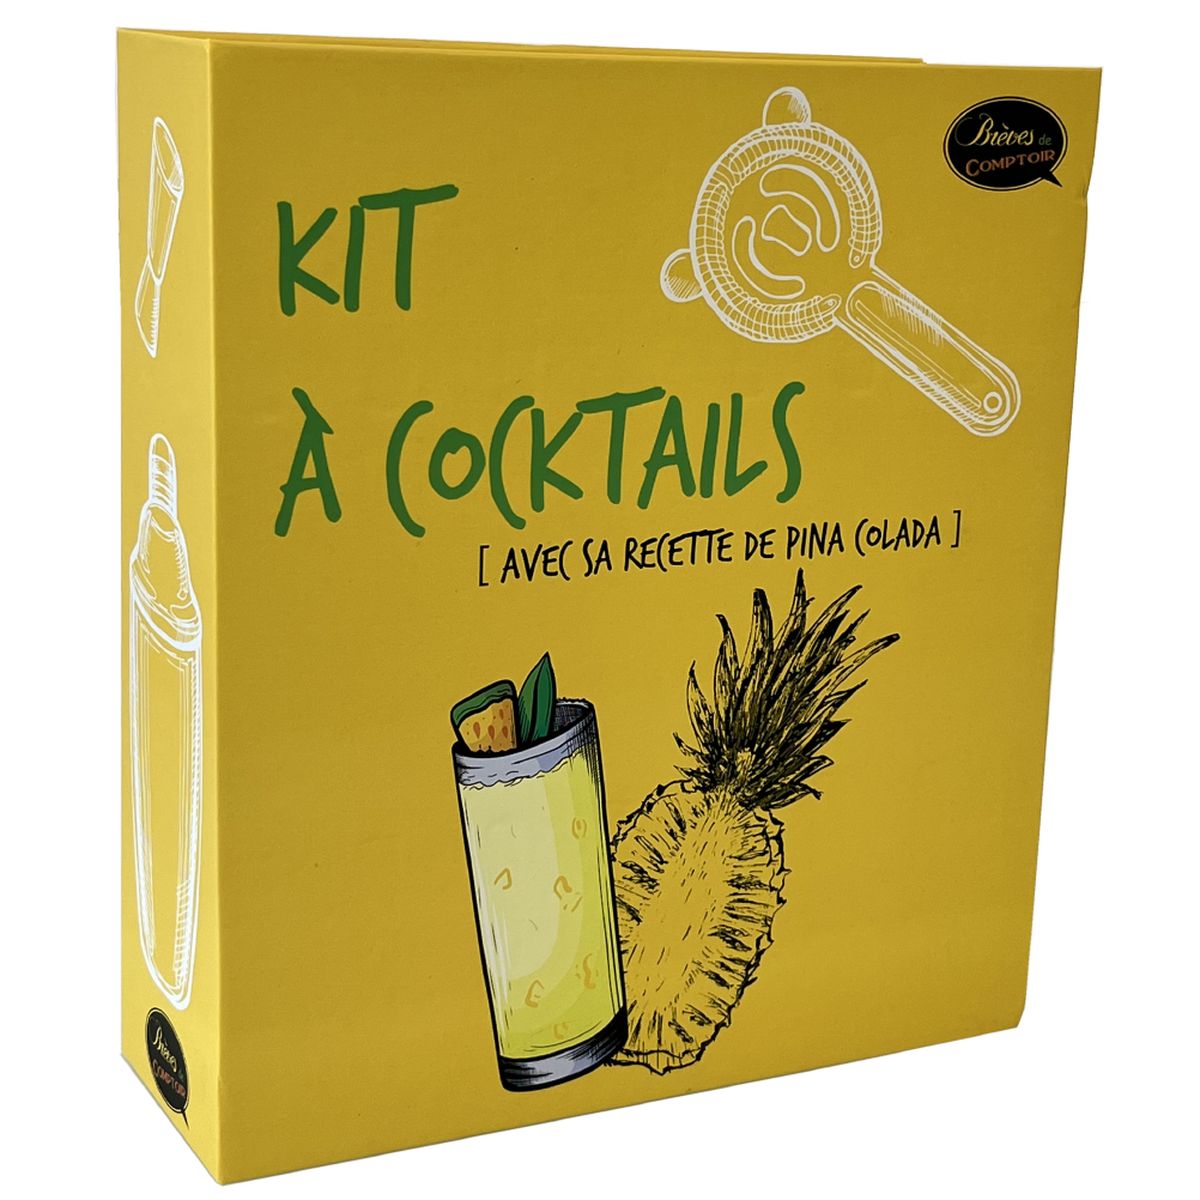 Pina Colada Cocktail Kit